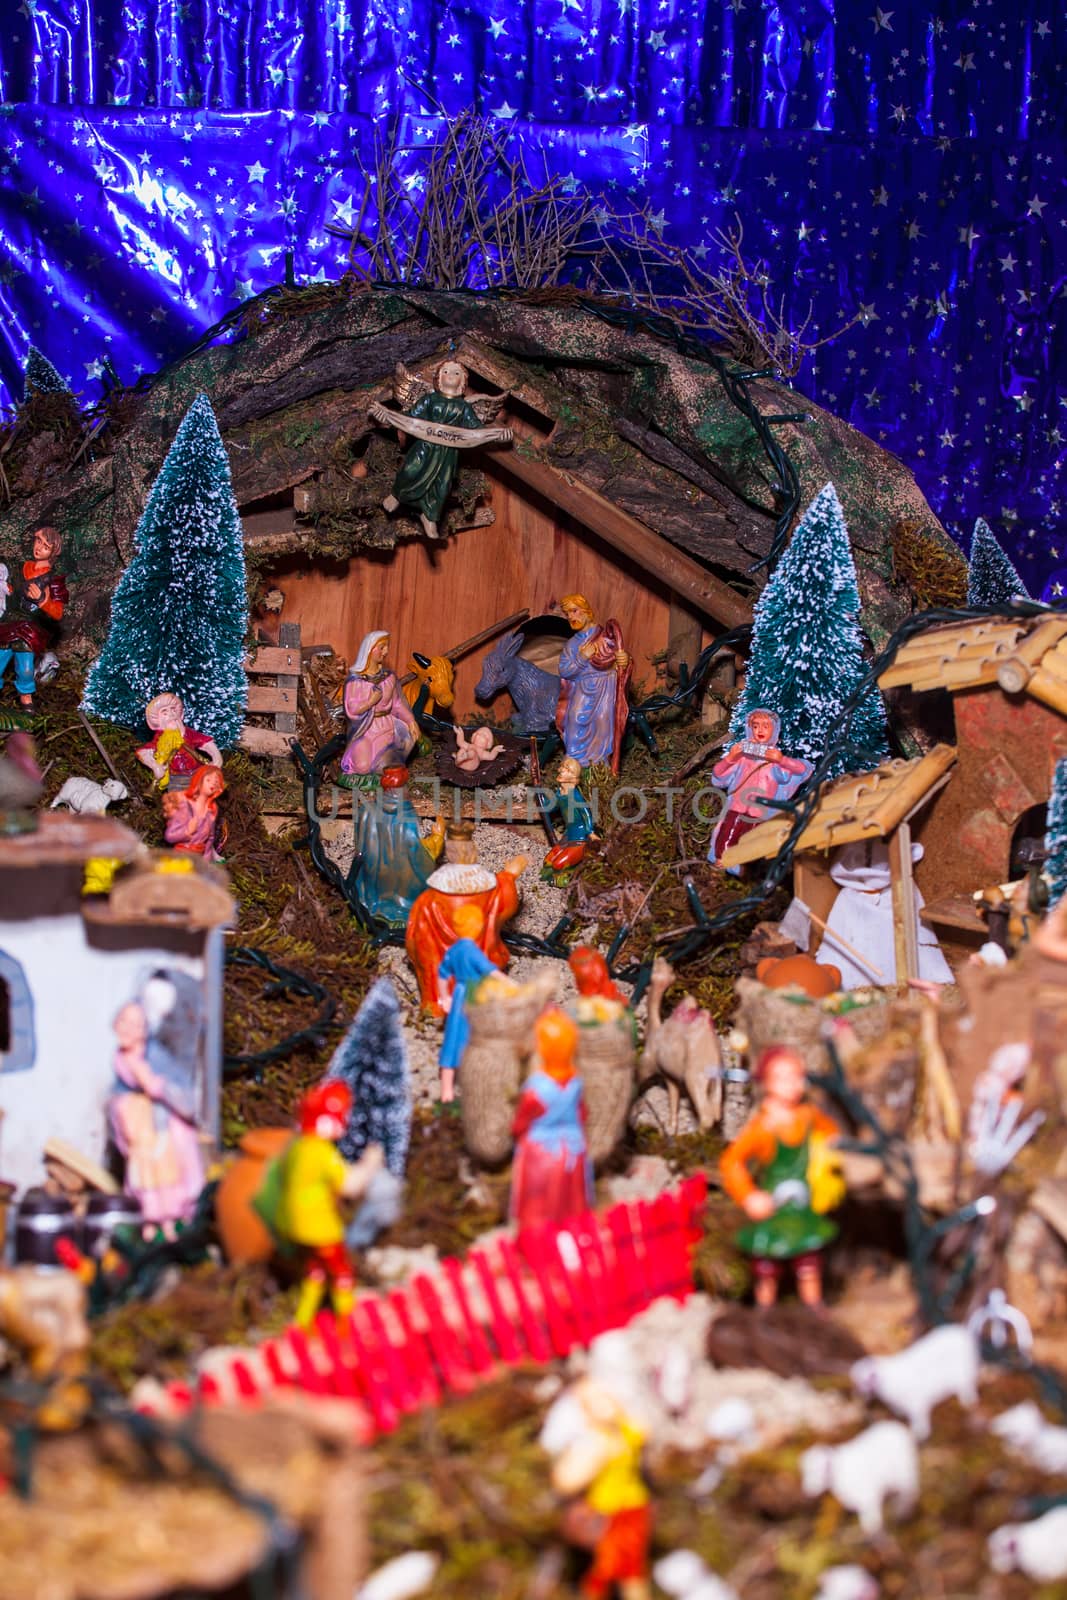 Nativity scene by bepsimage